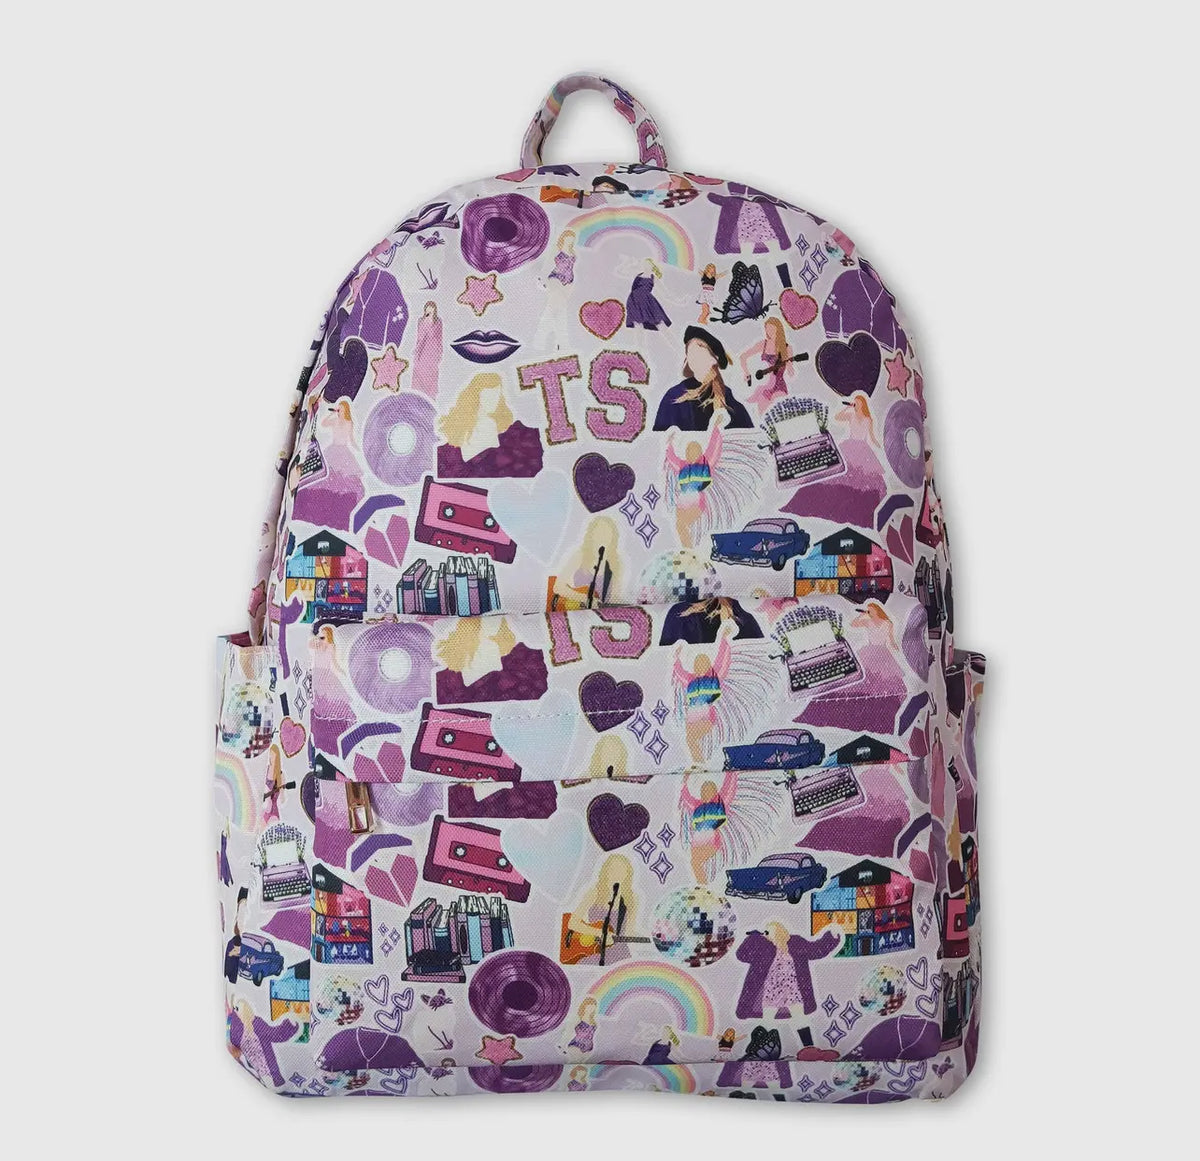 TS Backpack Lavender